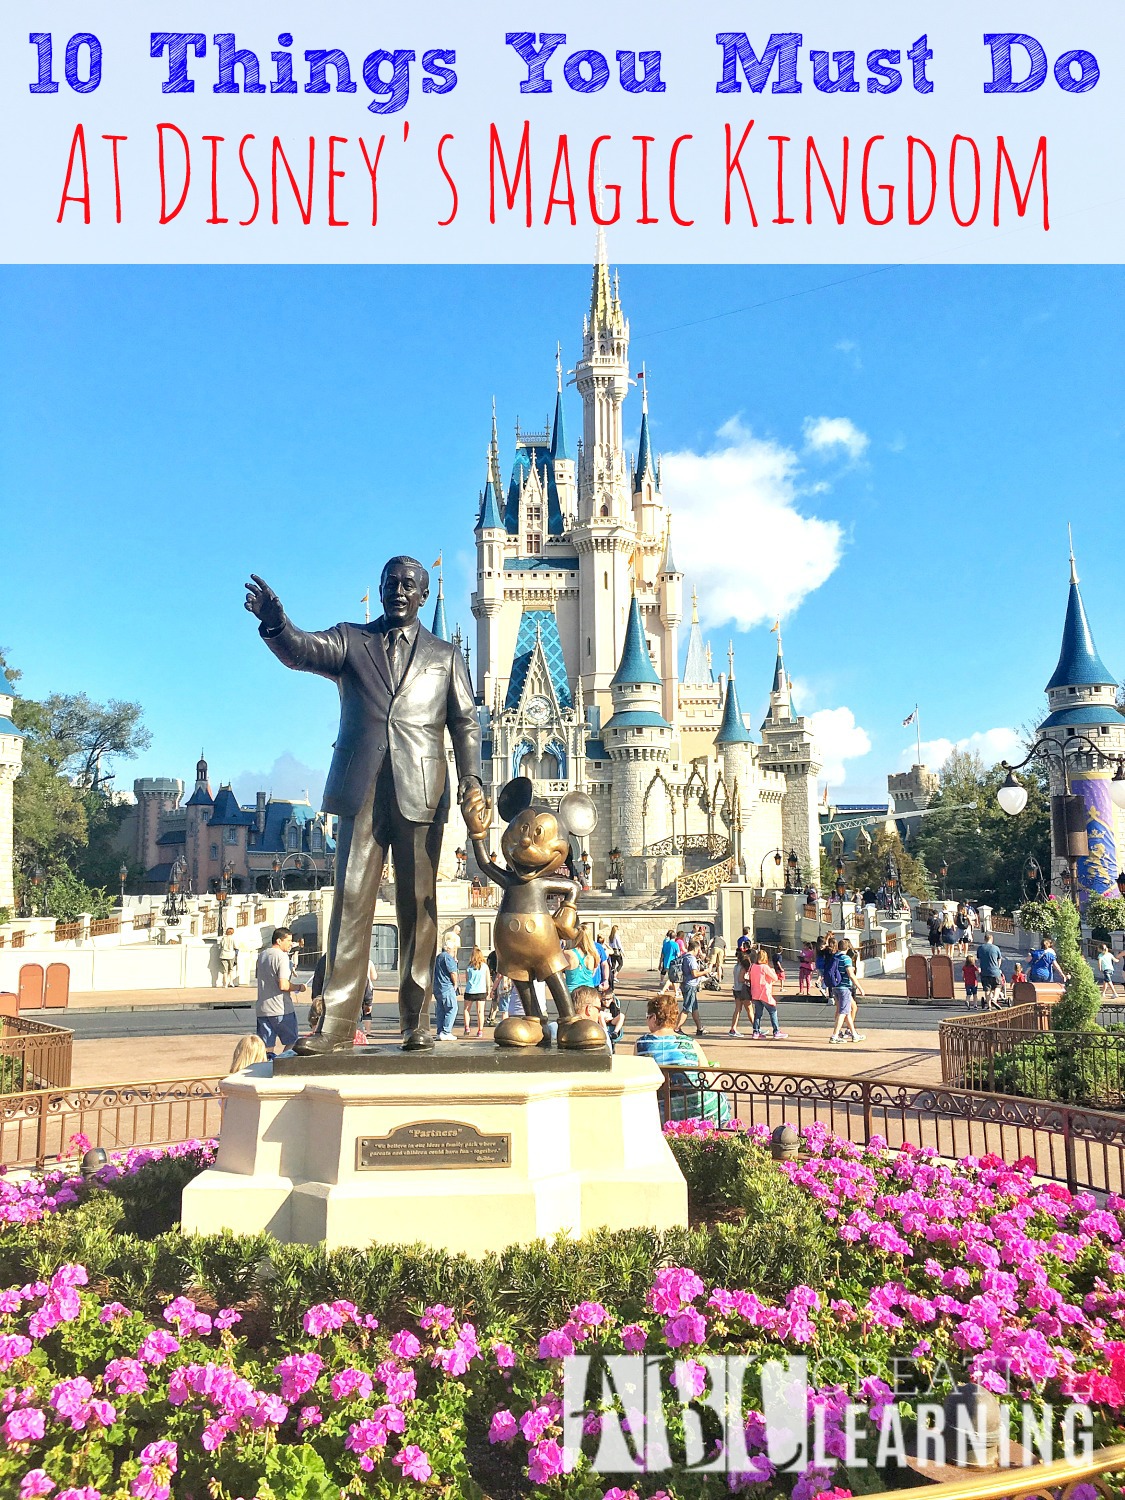 10 Things You Must Do At Disney's Magic Kingdom